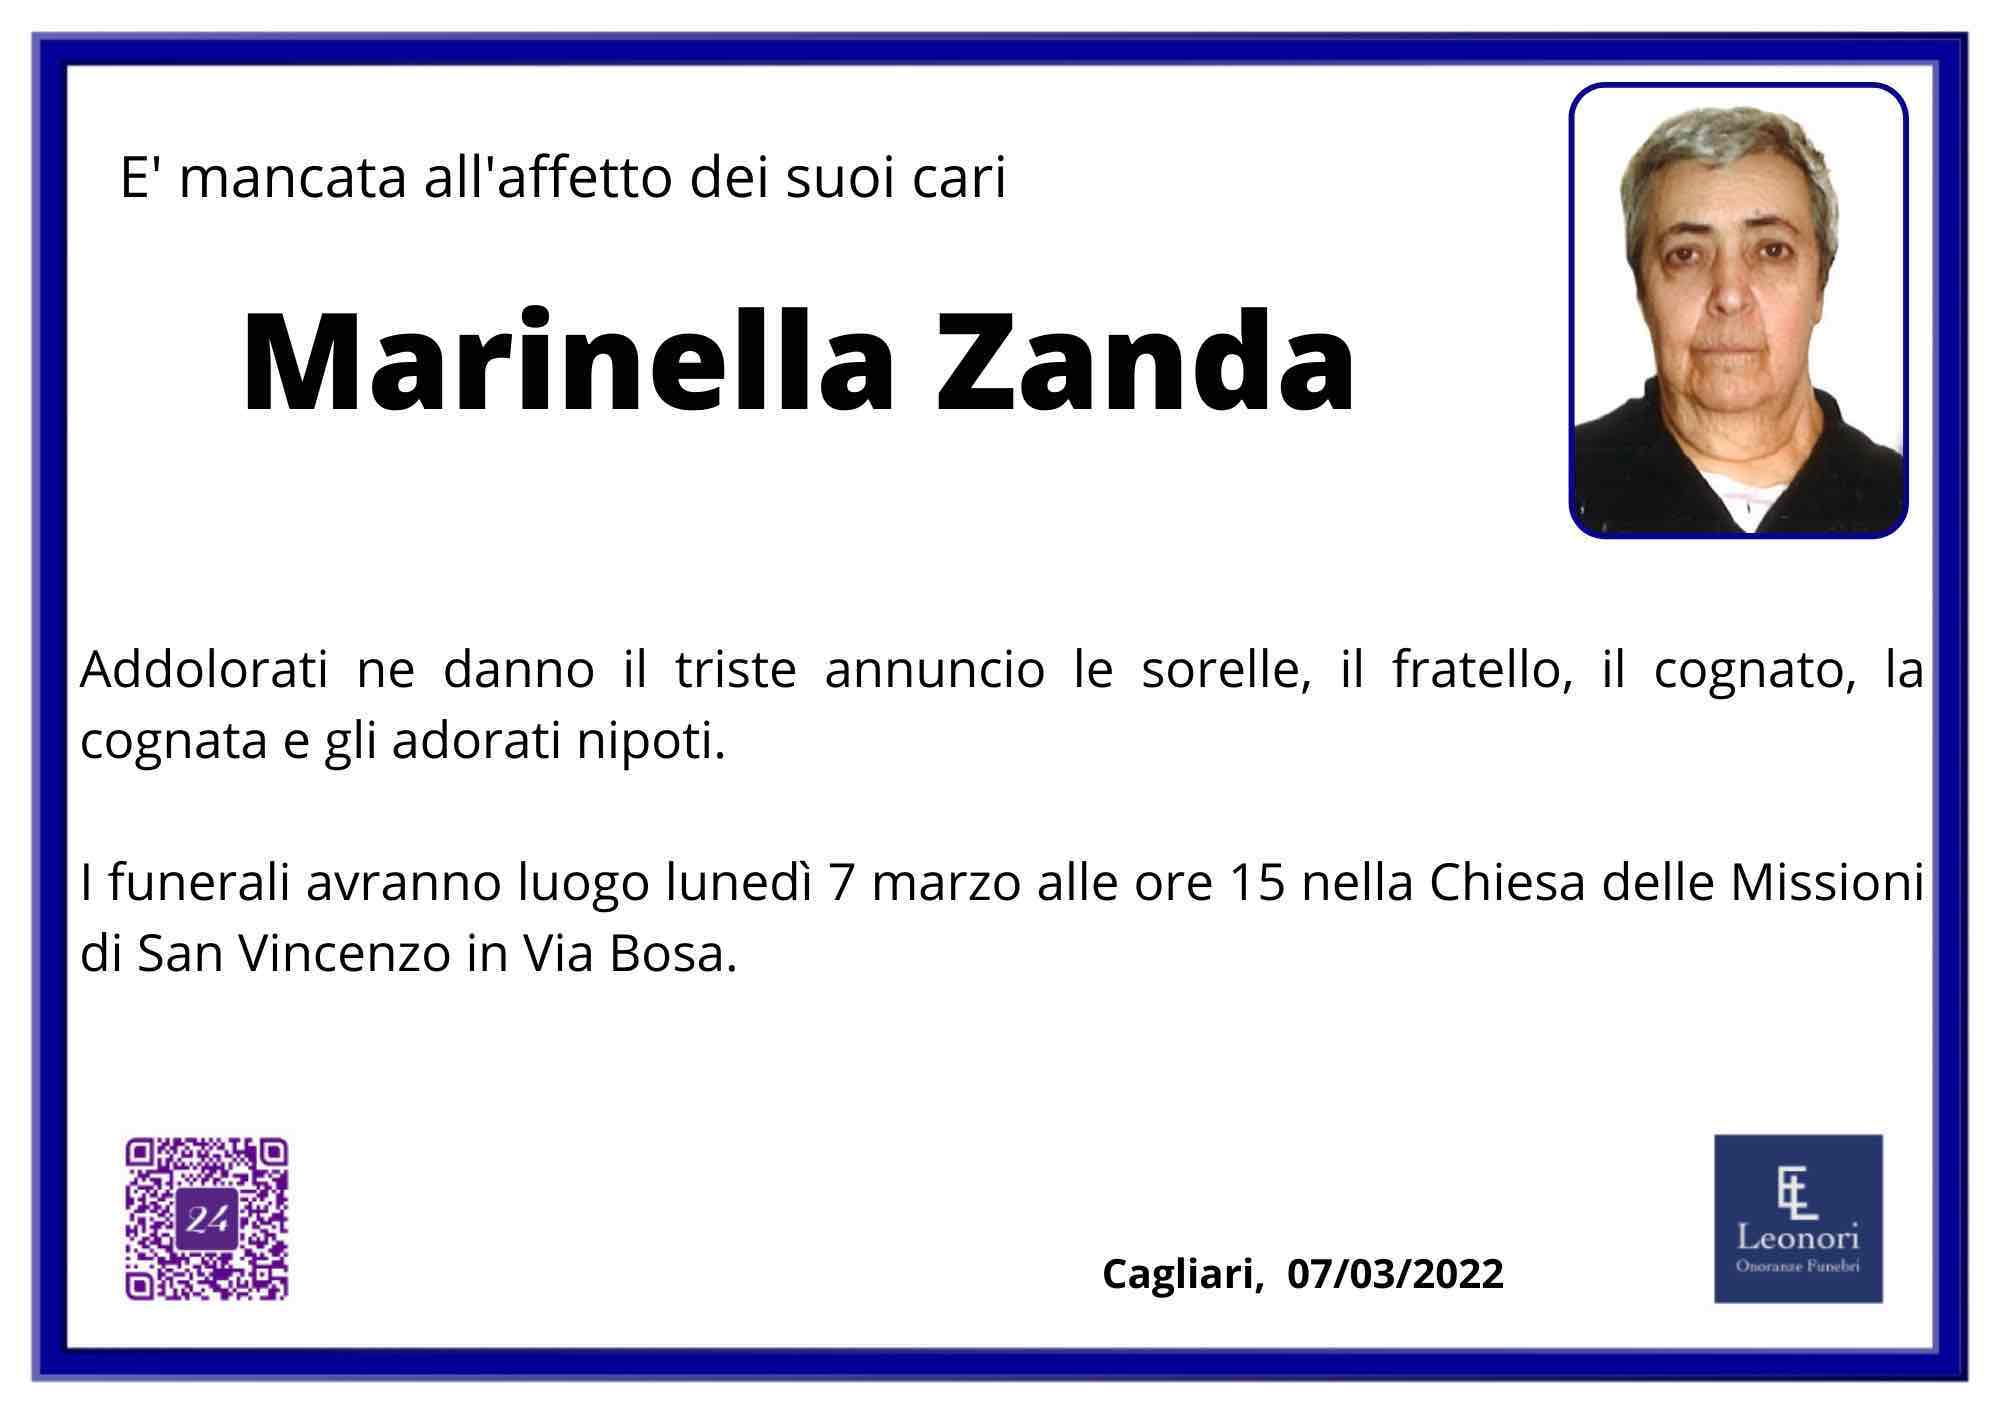 Marinella Zanda